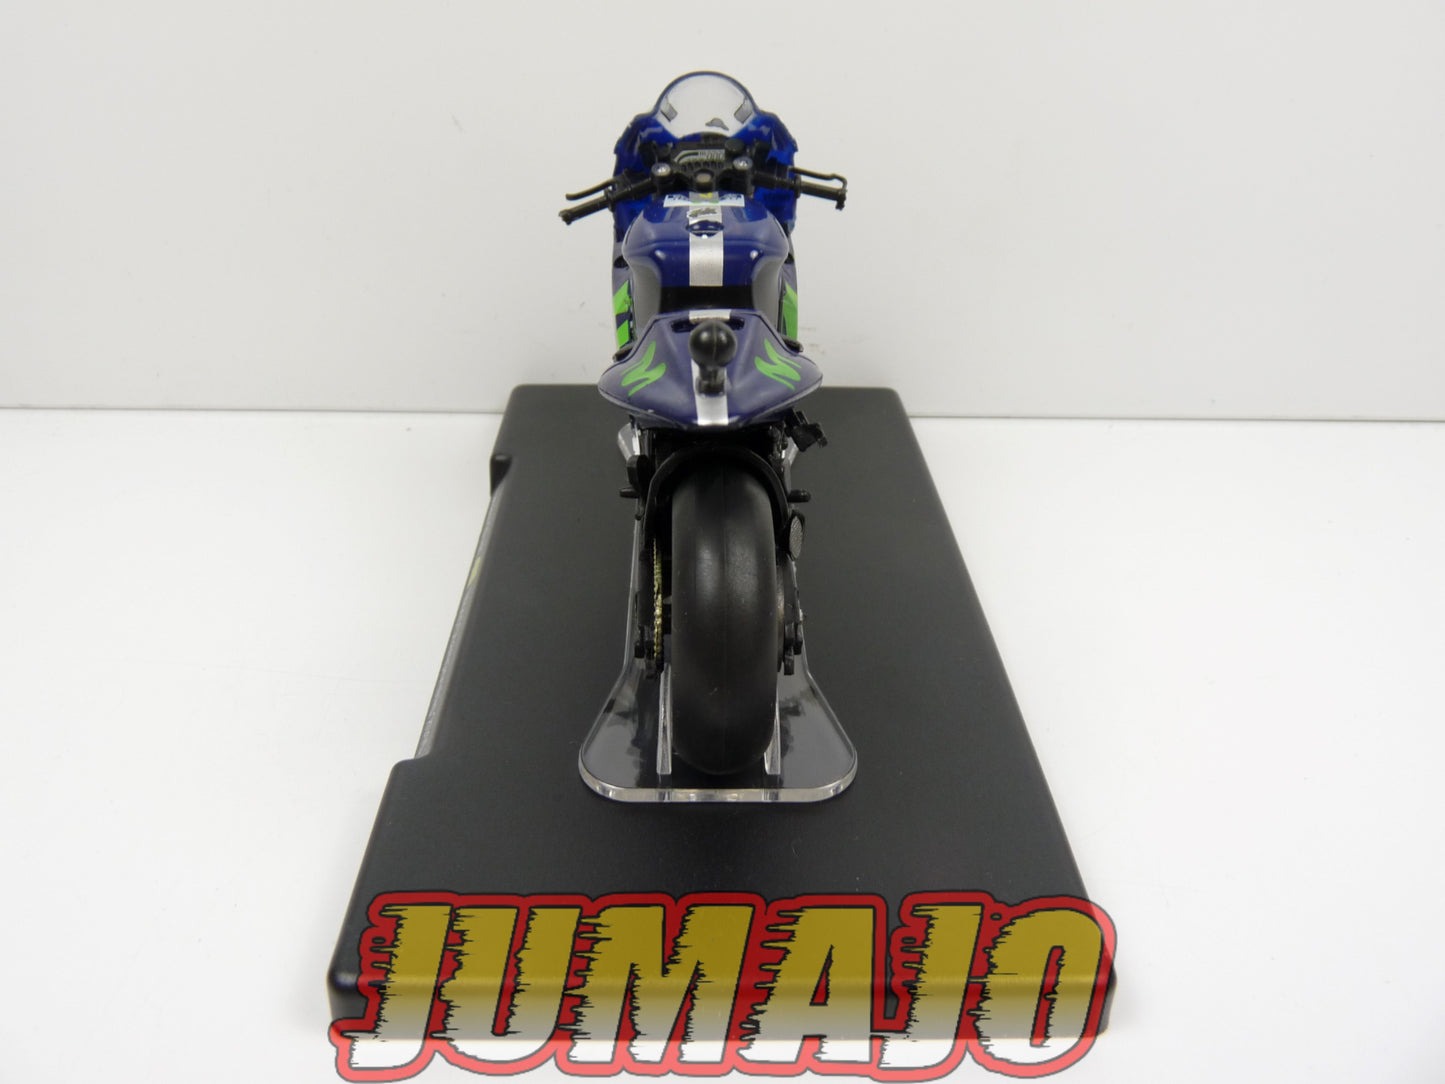 MR102 Moto Valentino Rossi LEO MODELS 1/18 : Yamaha YZR M1 #46 World Championship 2015